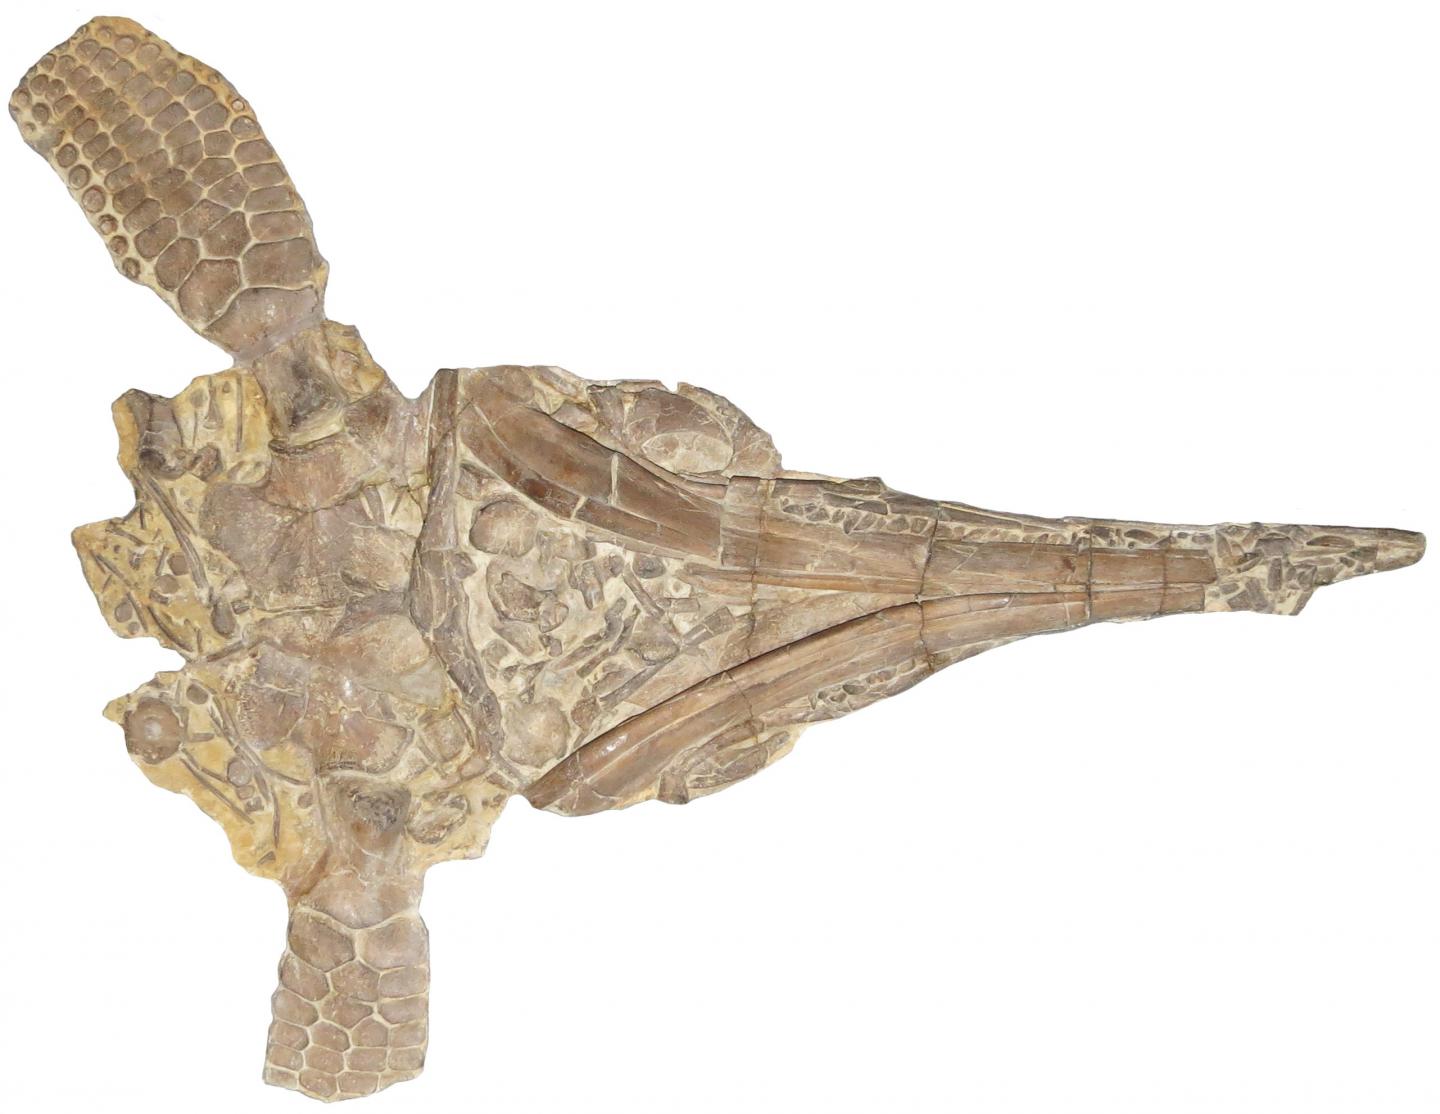 One of the Original Skeletons of Protoichthyosaurus